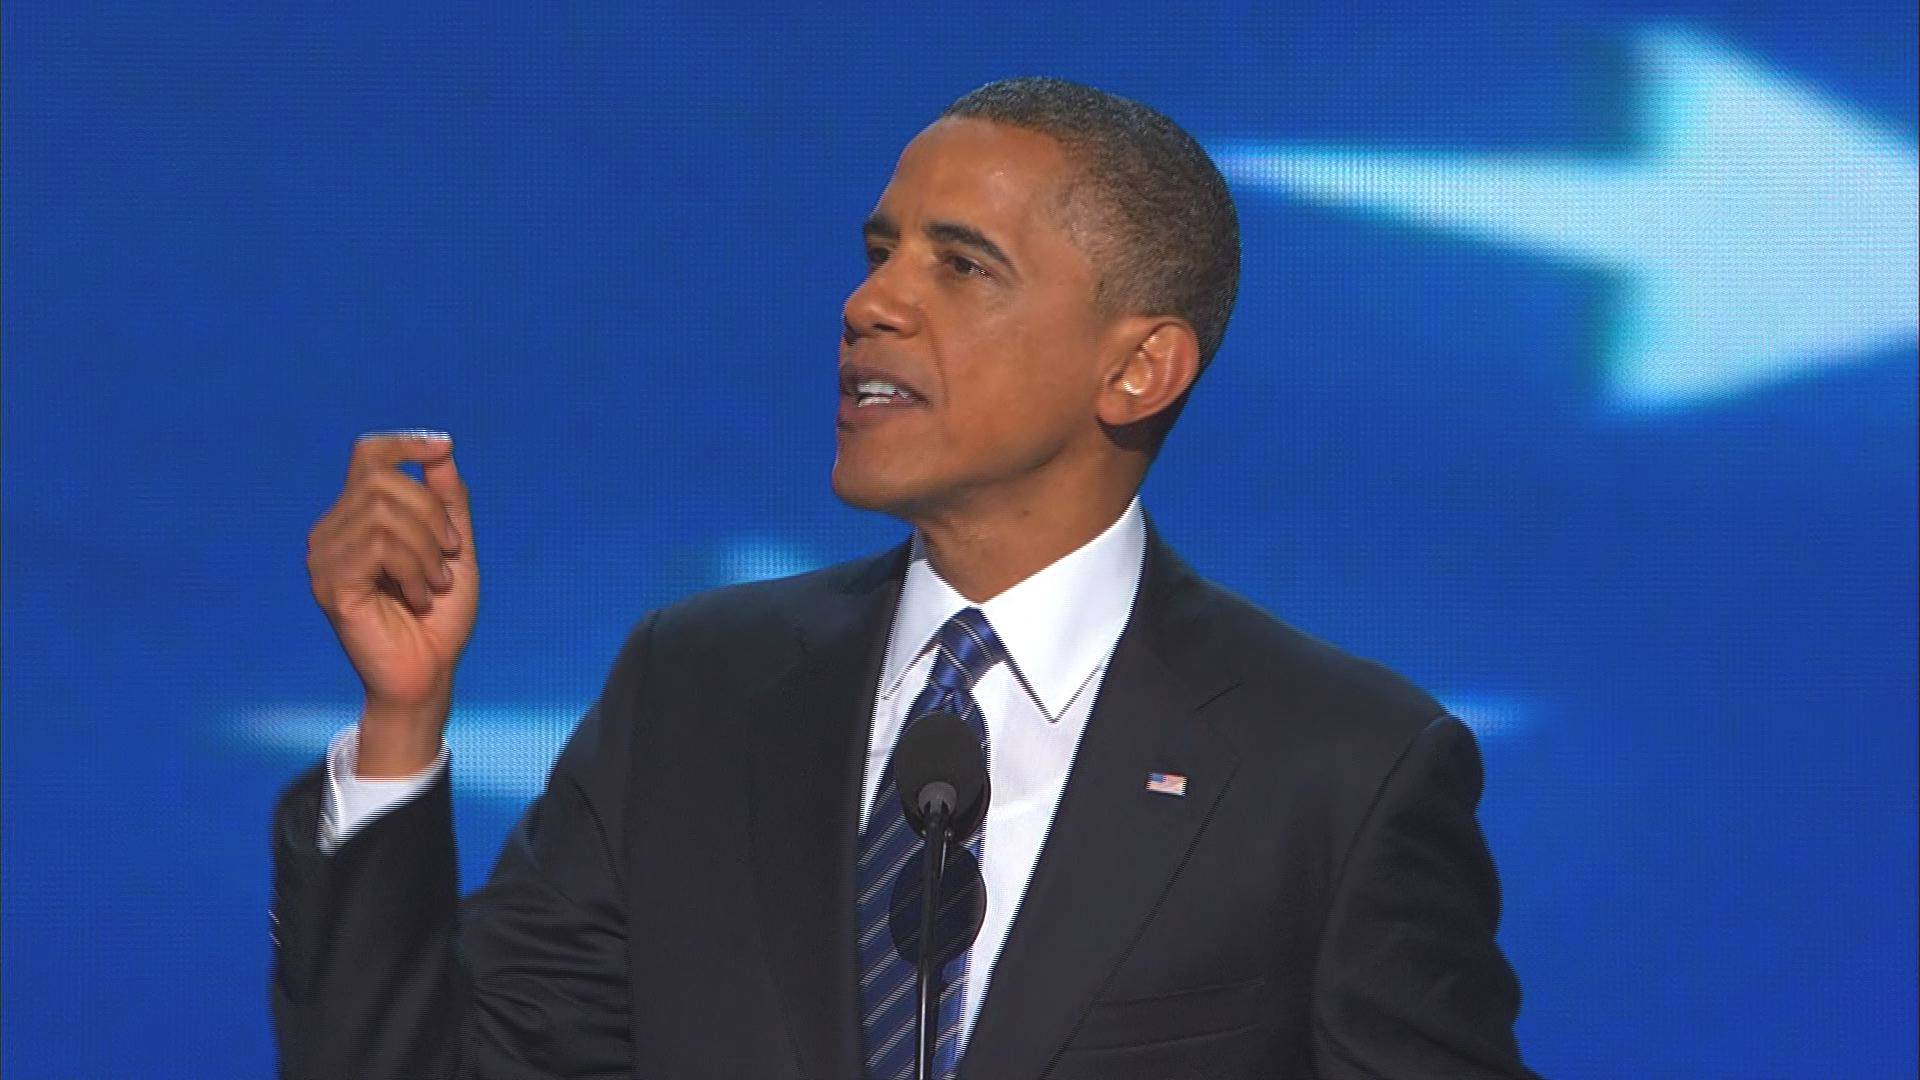 Barack Obama's Speech, 2012 Election, DNC